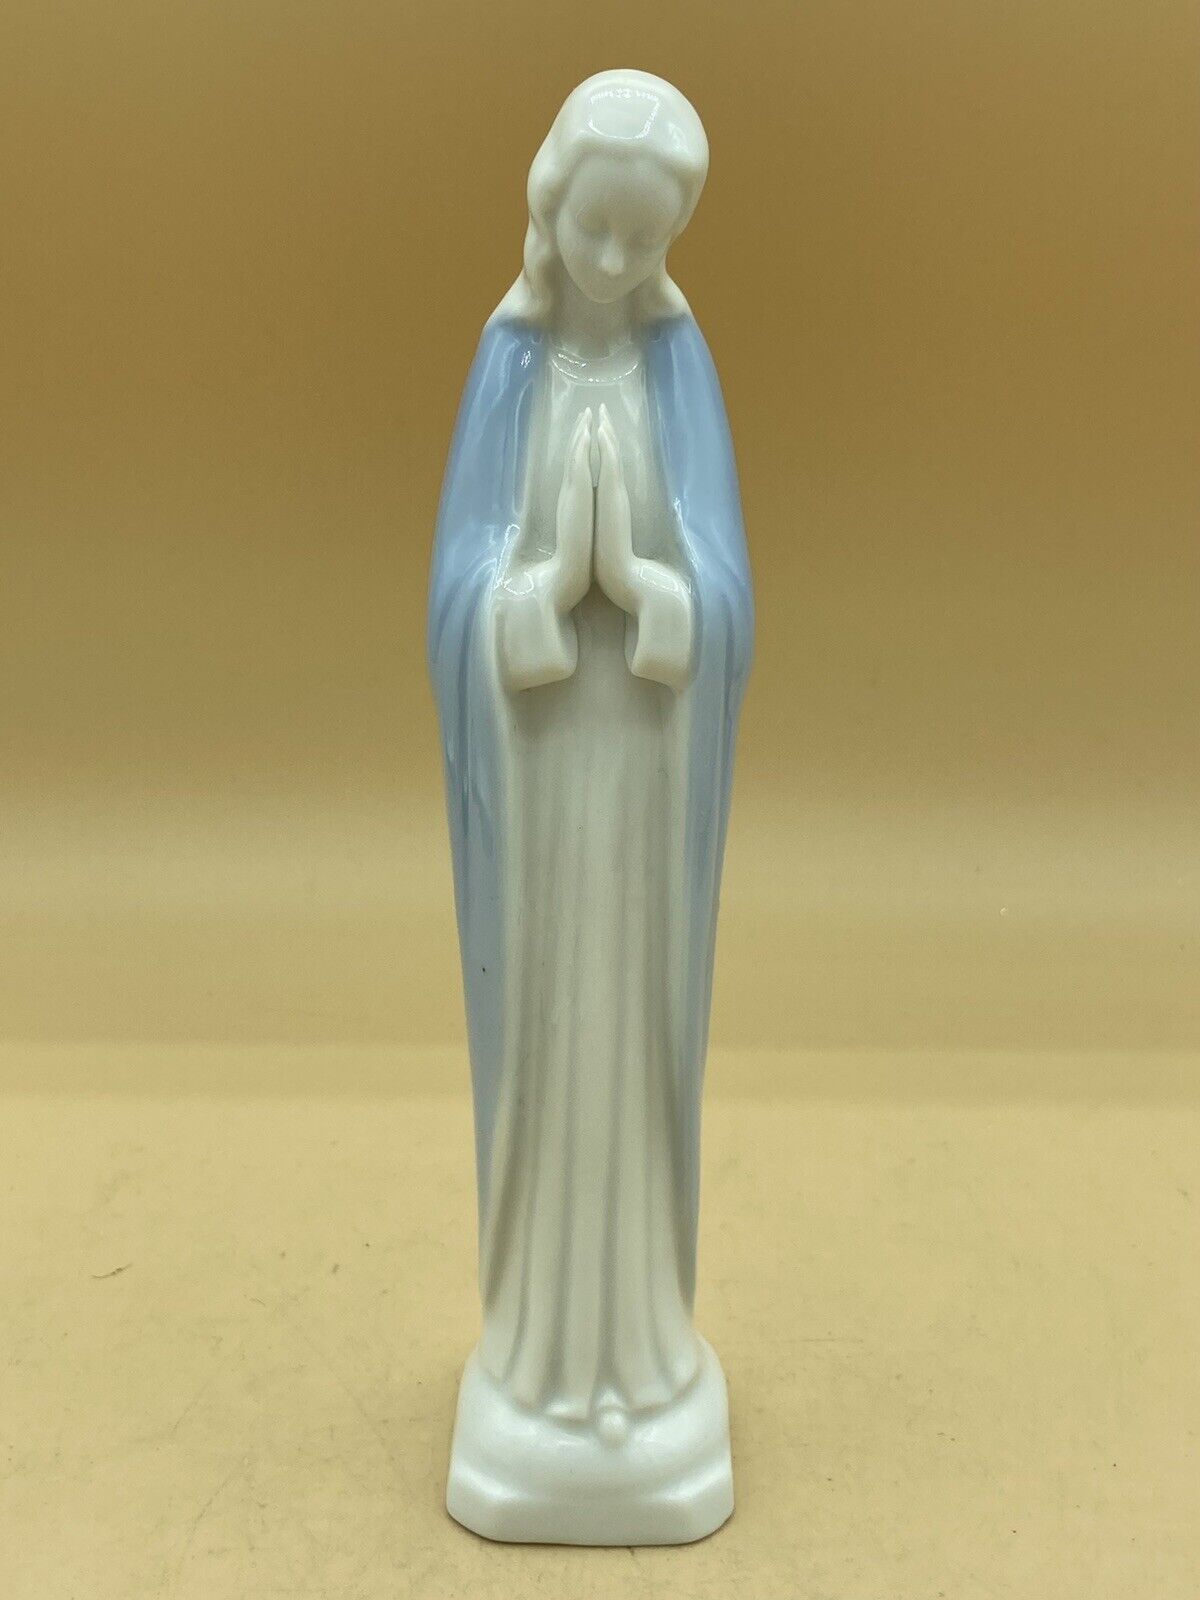 Vintage Sanmyro Japan Porcelain Religious Figurine Praying Virgin Mary Madonna